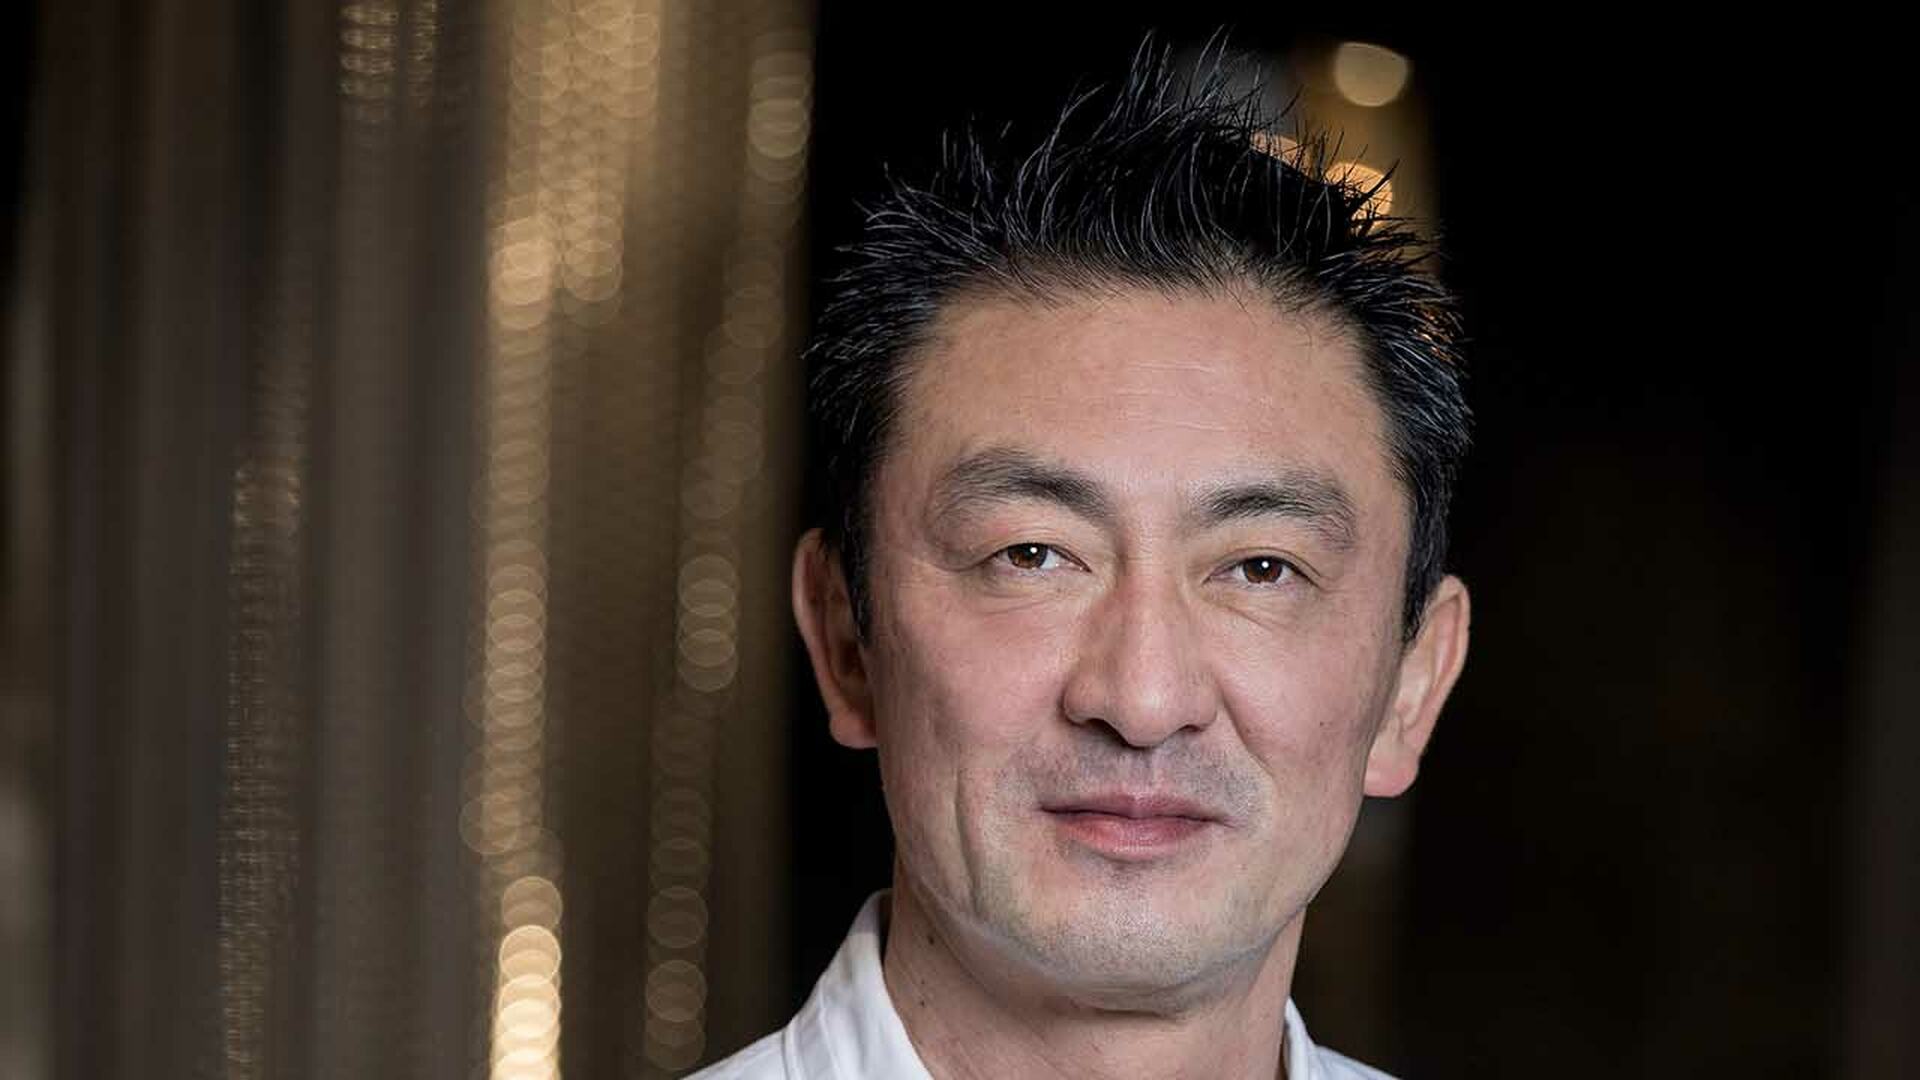 Invited Chef: Masanori Tomikawa